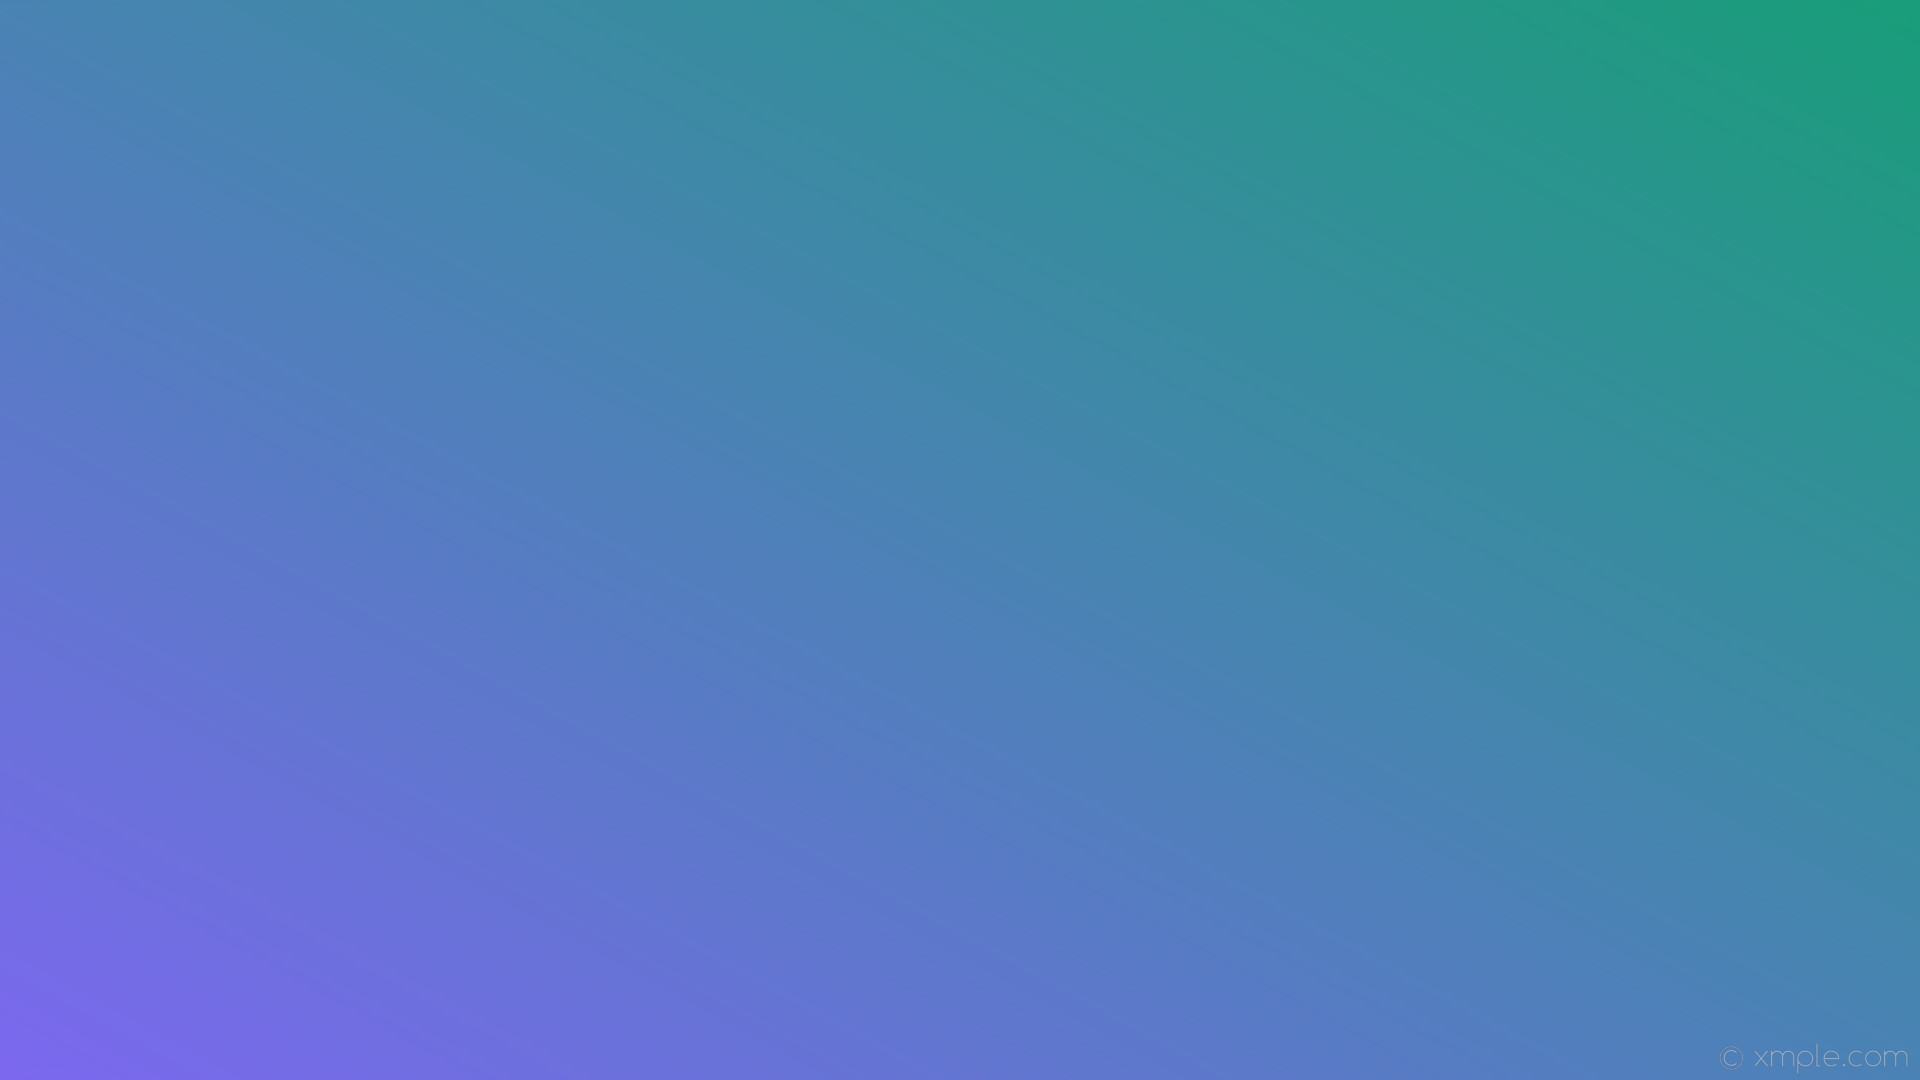 1920x1080 wallpaper purple gradient turquoise linear medium slate blue #199d7a  #7b68ee 30Â°